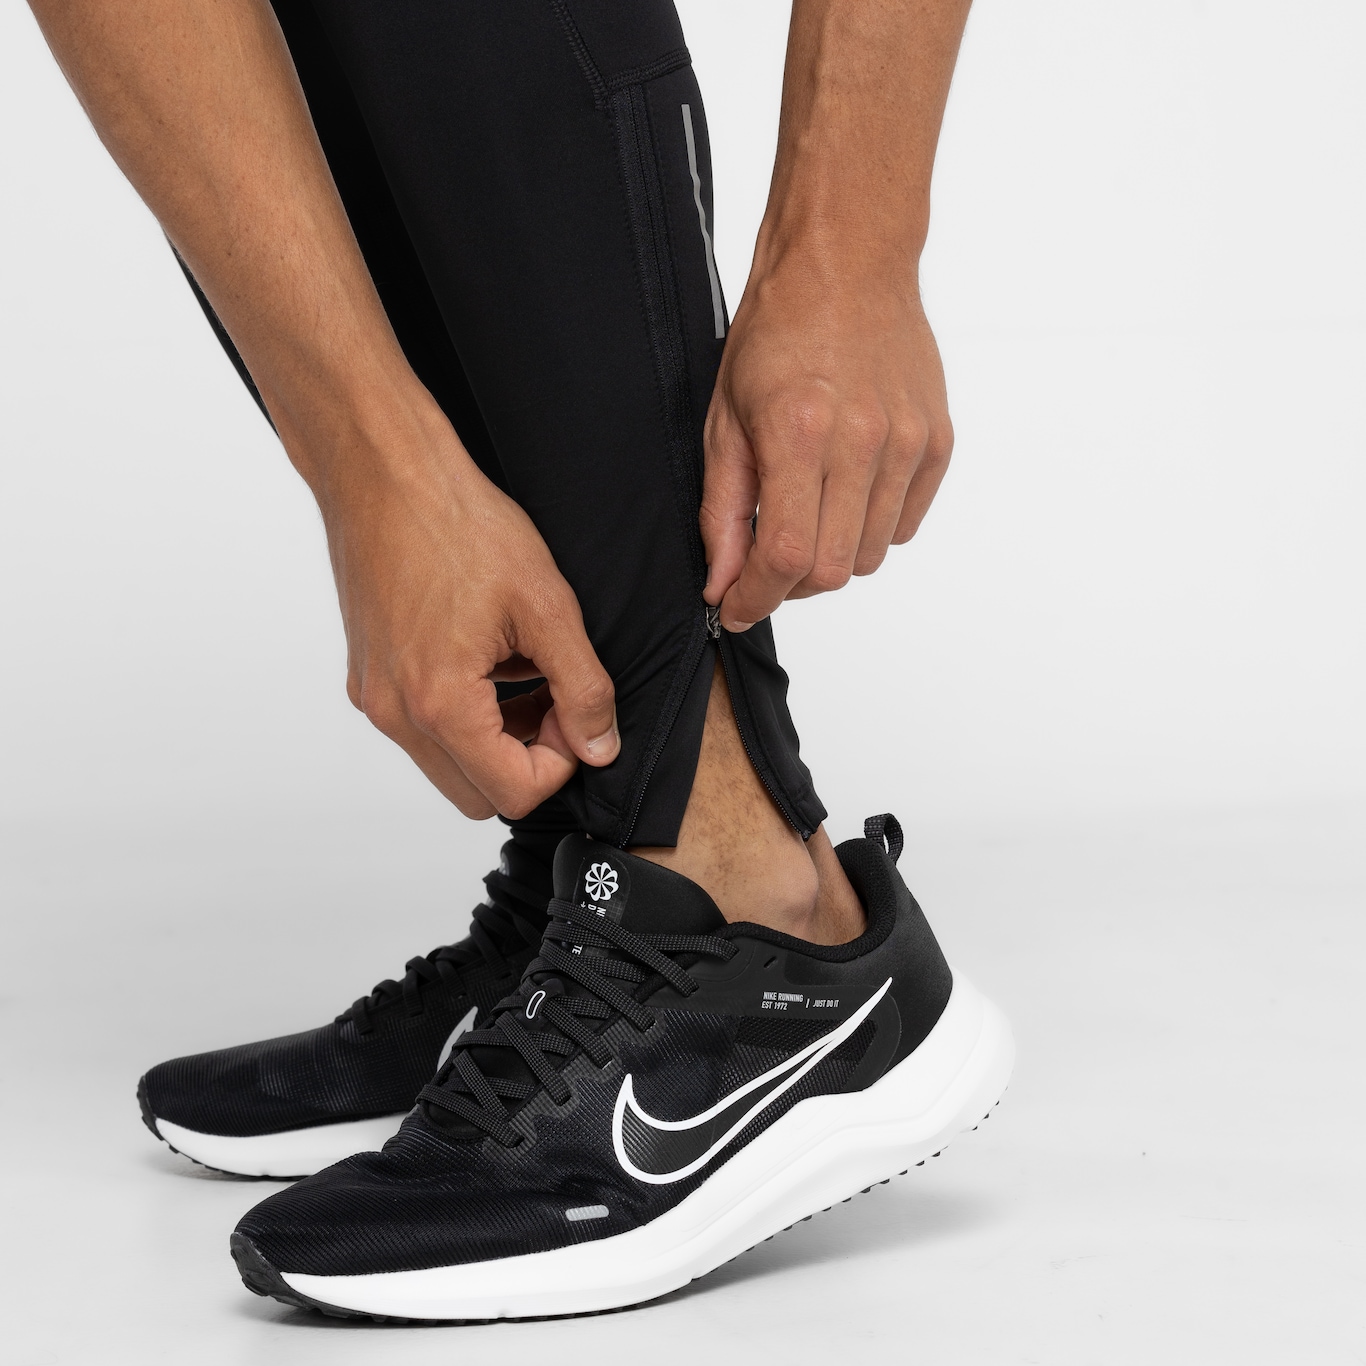 Legging Nike Dri-fit Challenger Masculina